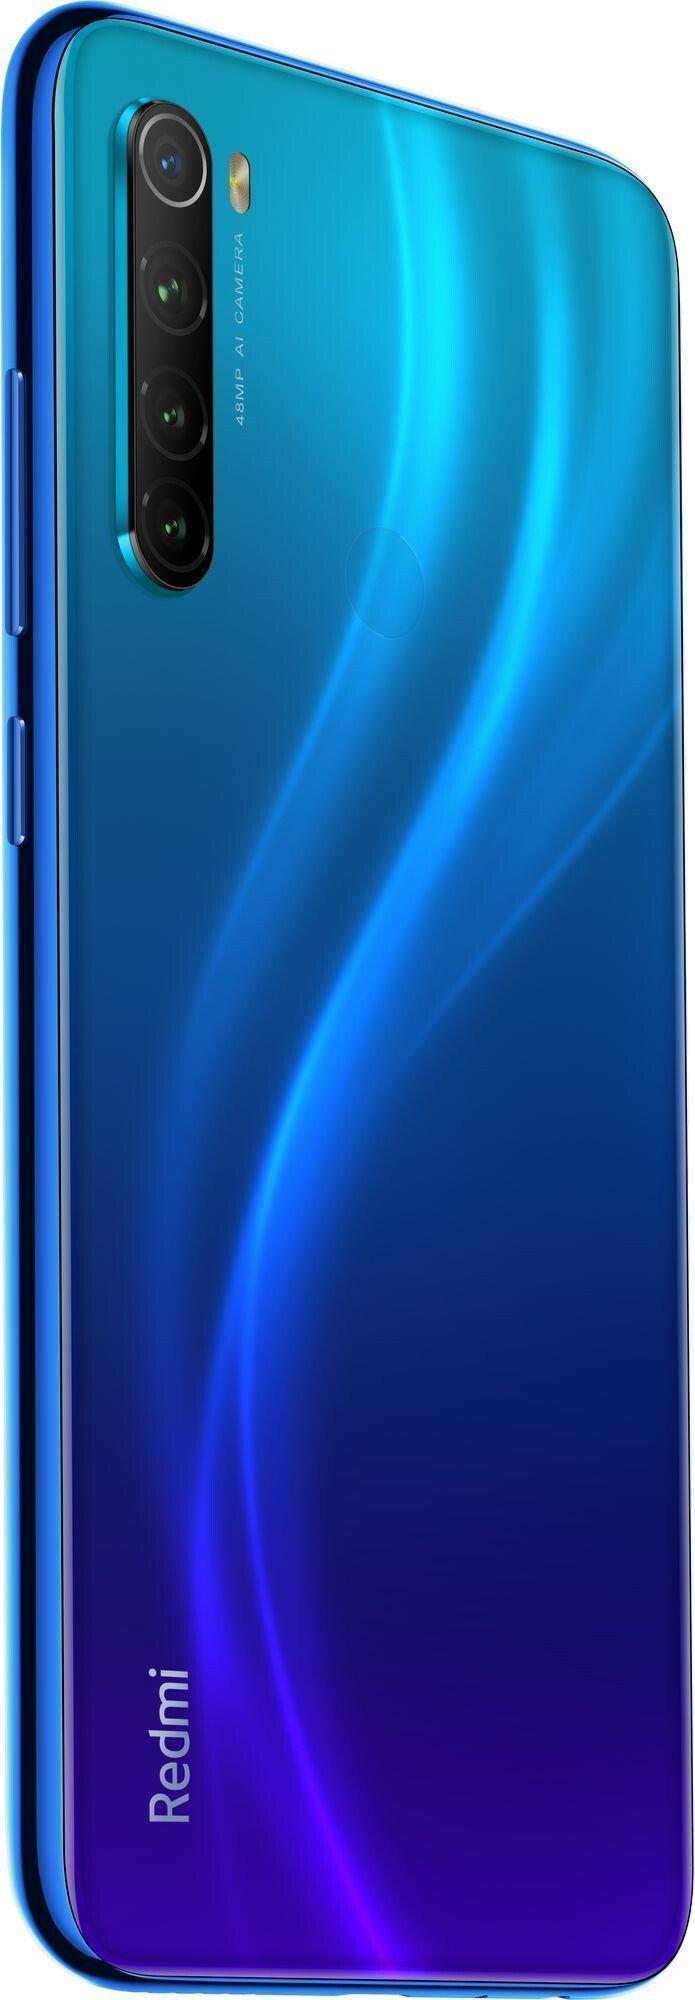 Купить Смартфон Xiaomi Redmi Note 8 4/64Gb Neptune Blue